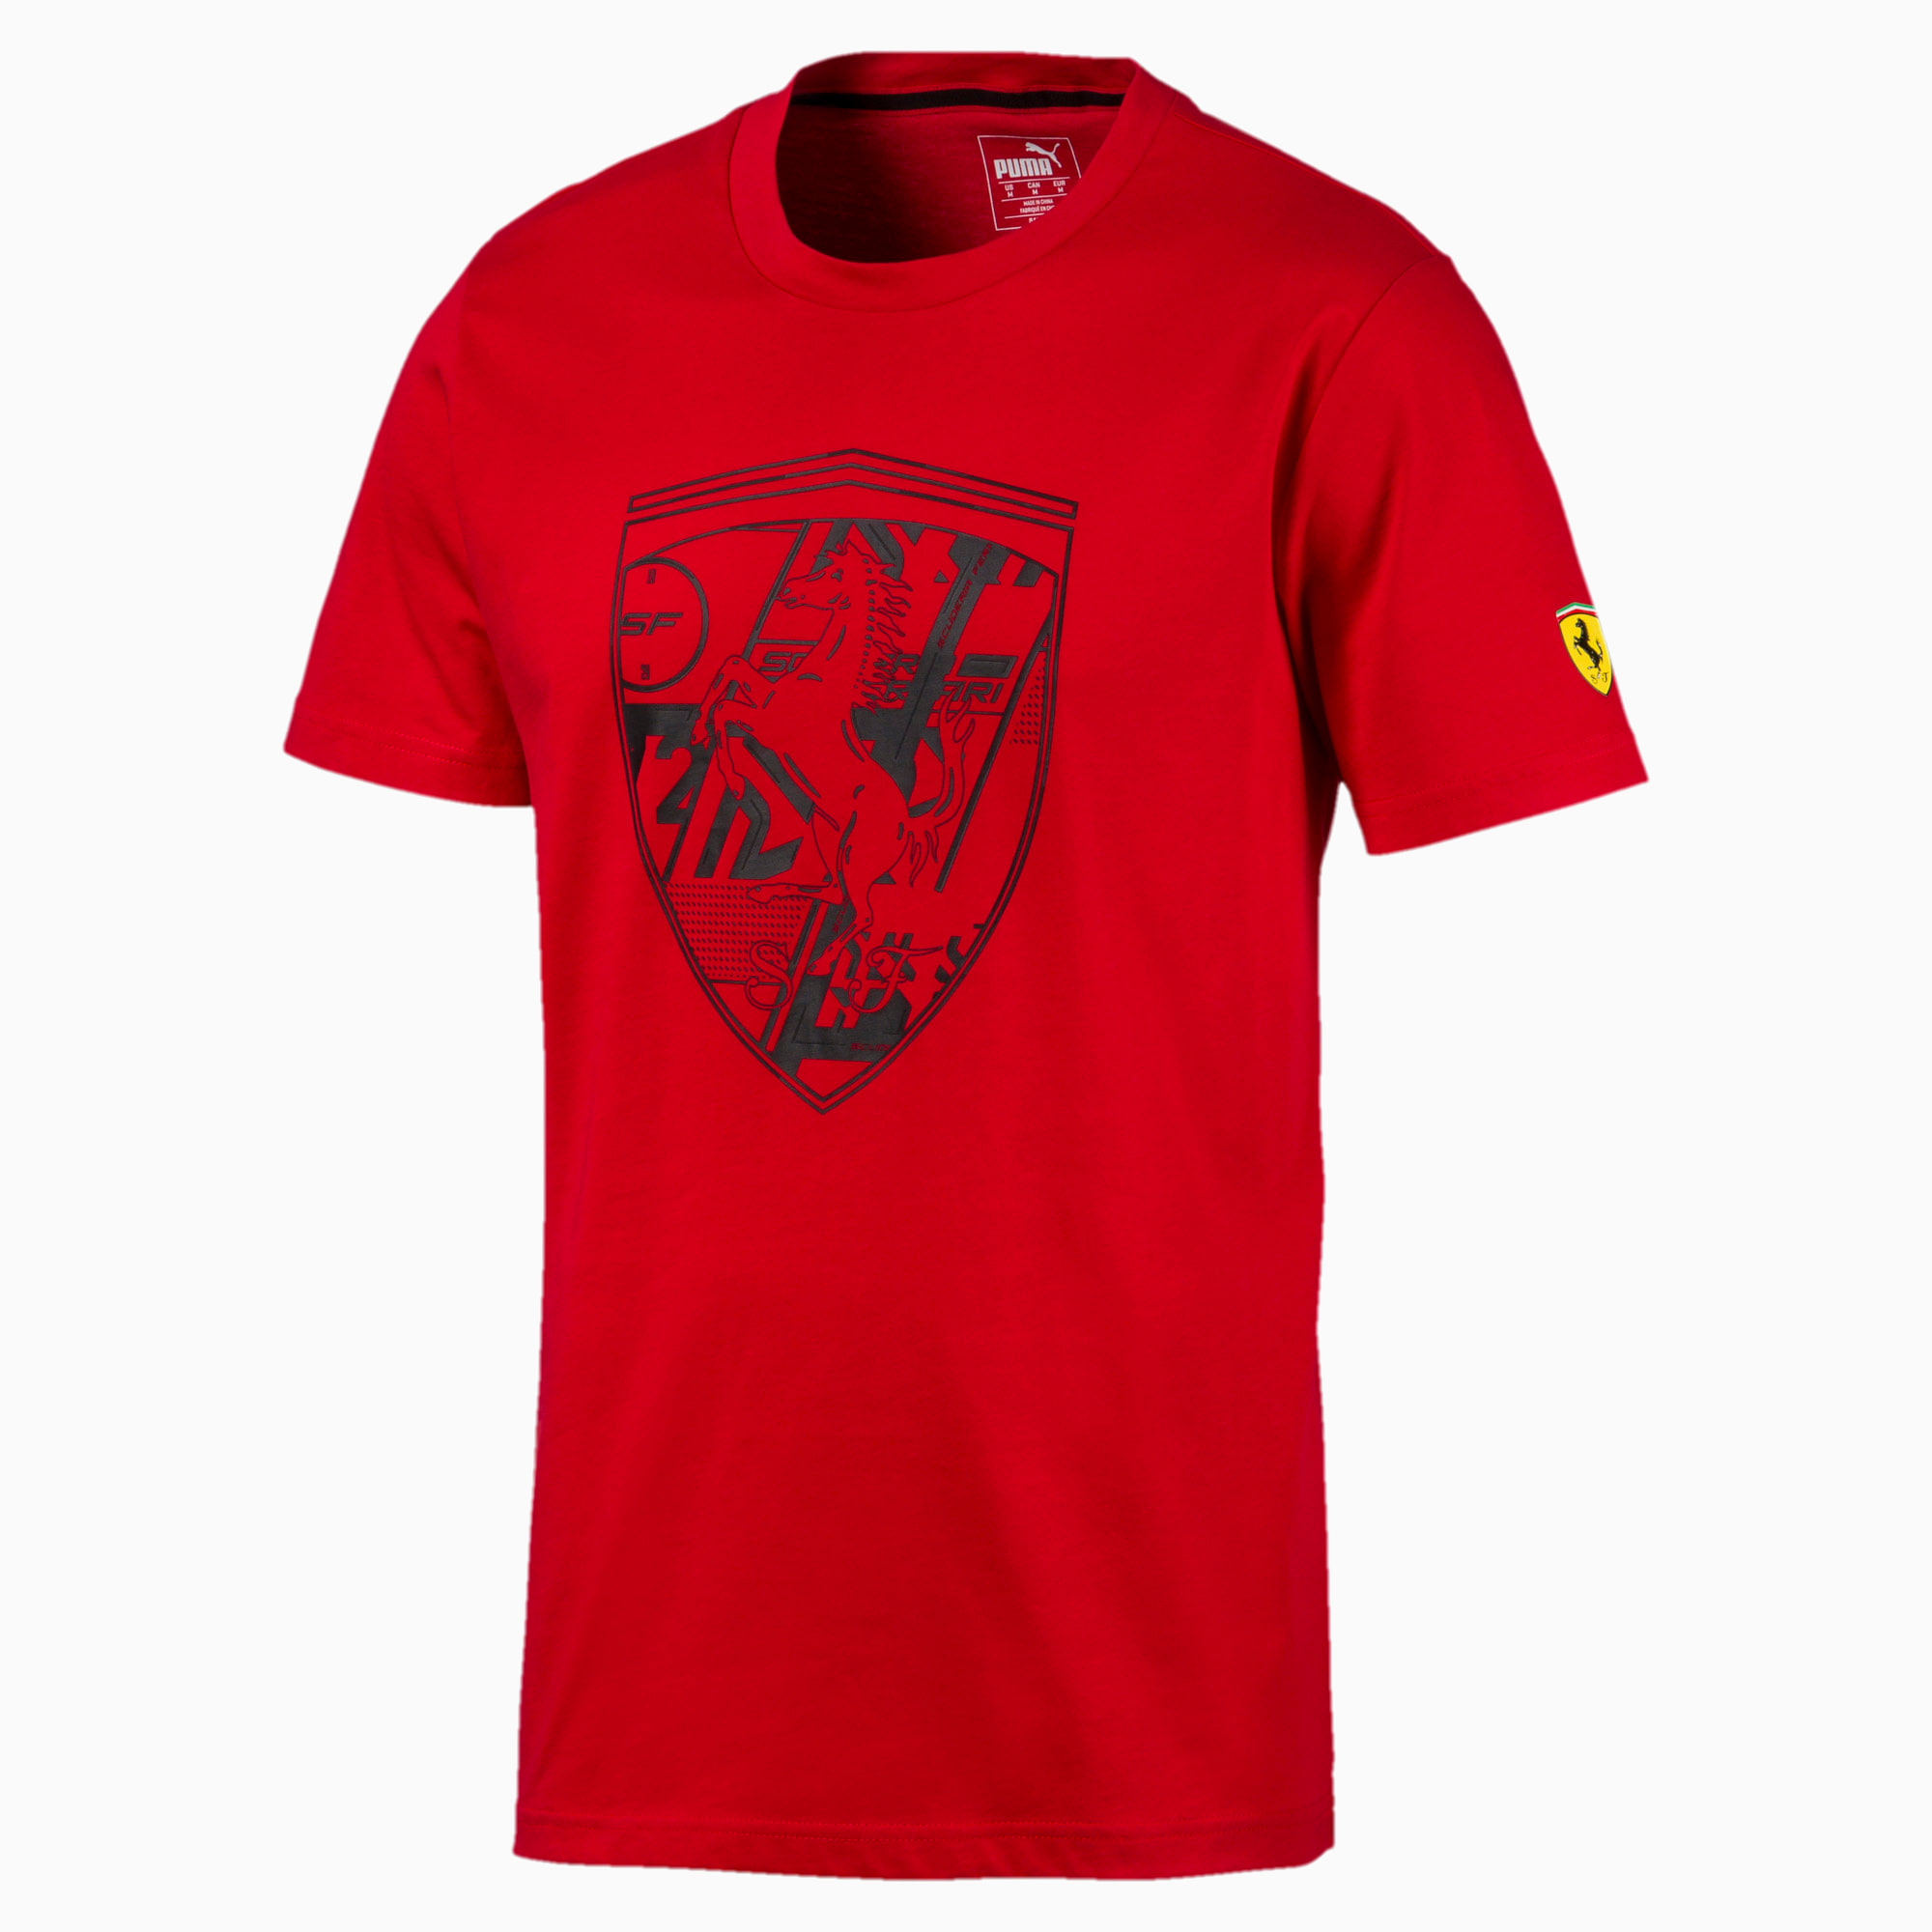 Ferrari Graphic Men's Tee, Rosso Corsa, large-SEA